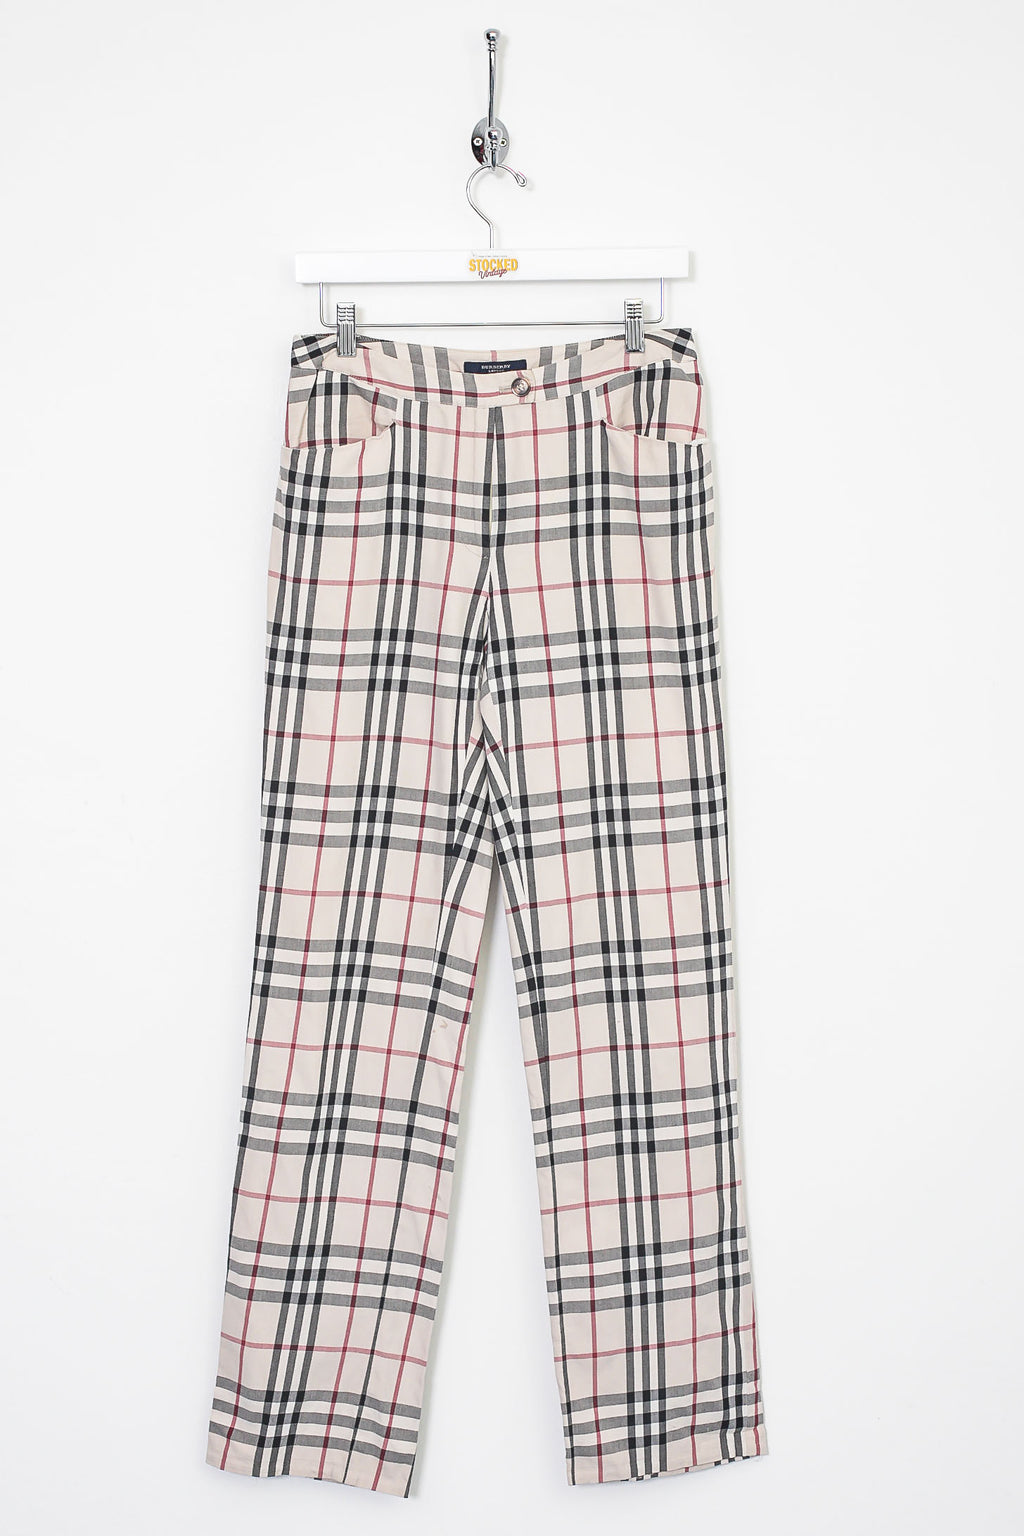 MODERN BURBERRY LONDON Womens NOVA CHECK Plaid Wool Pants Made In France Sz  6 $225.00 - PicClick